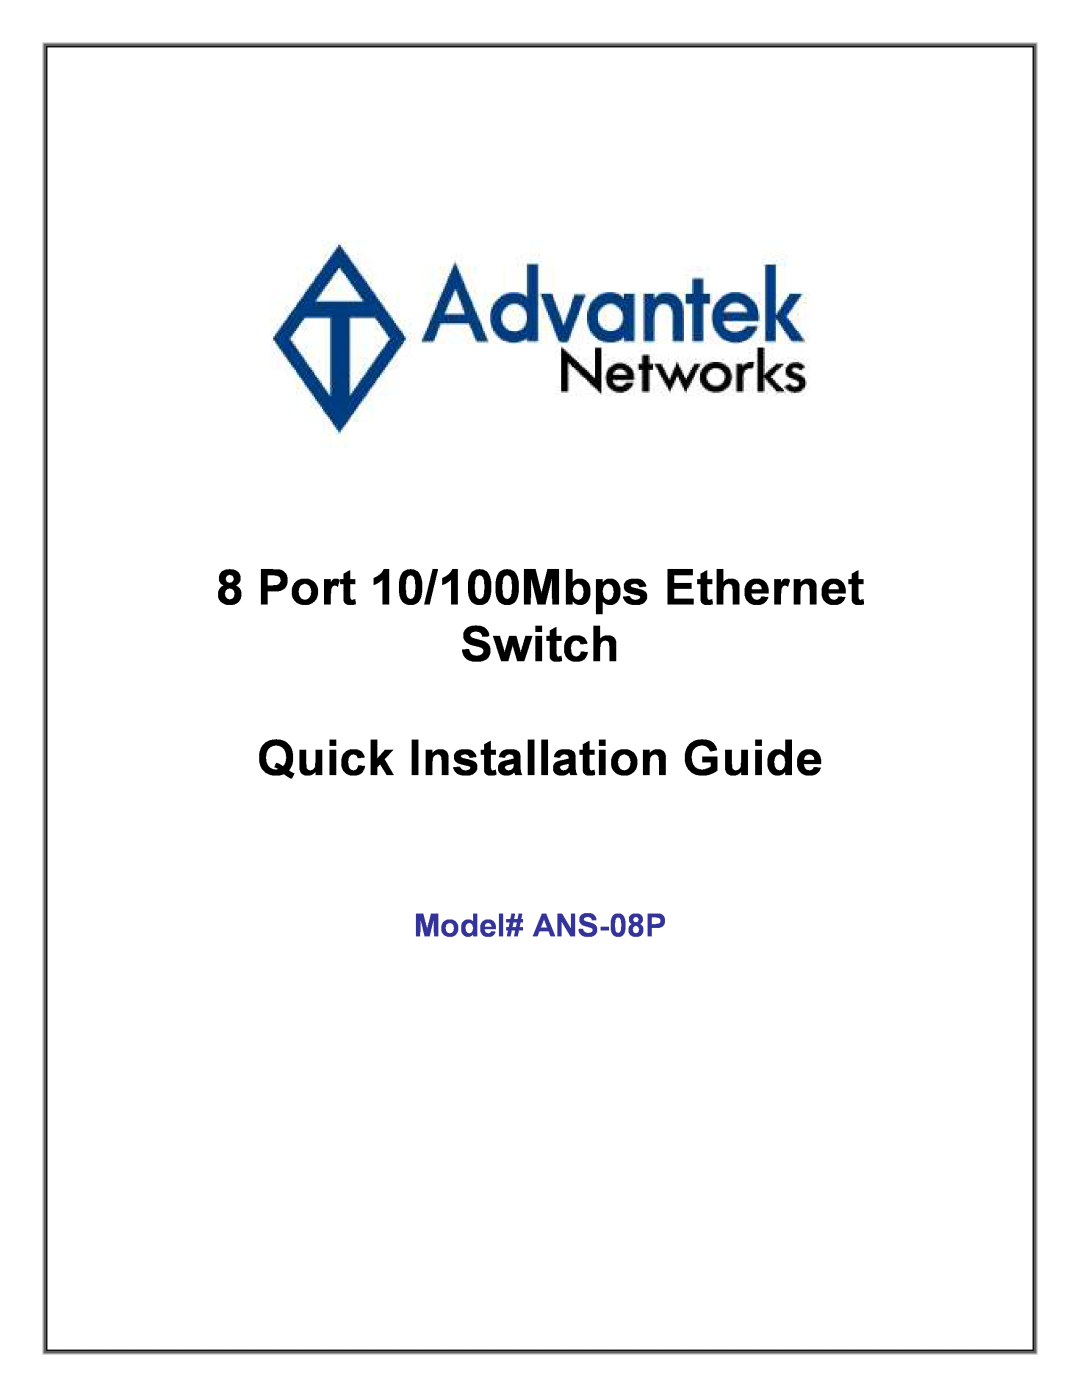 Advantek Networks manual Port 10/100Mbps Ethernet Switch Quick Installation Guide, Model# ANS-08P 